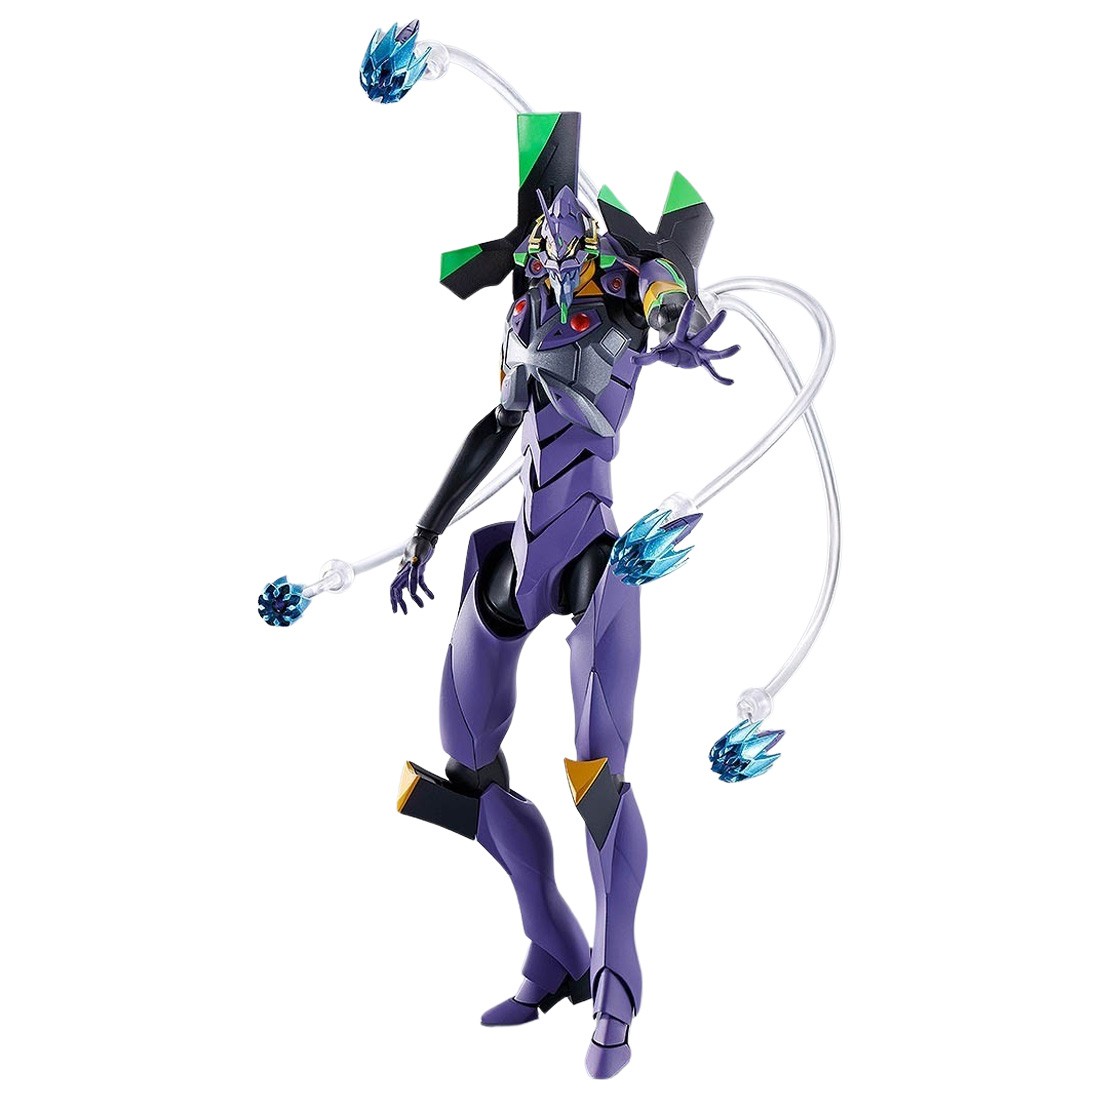 Bandai The Robot Spirits Evangelion 3.0+1.0 Thrice Upon A Time Side Eva Evangelion 13 Figure (purple)